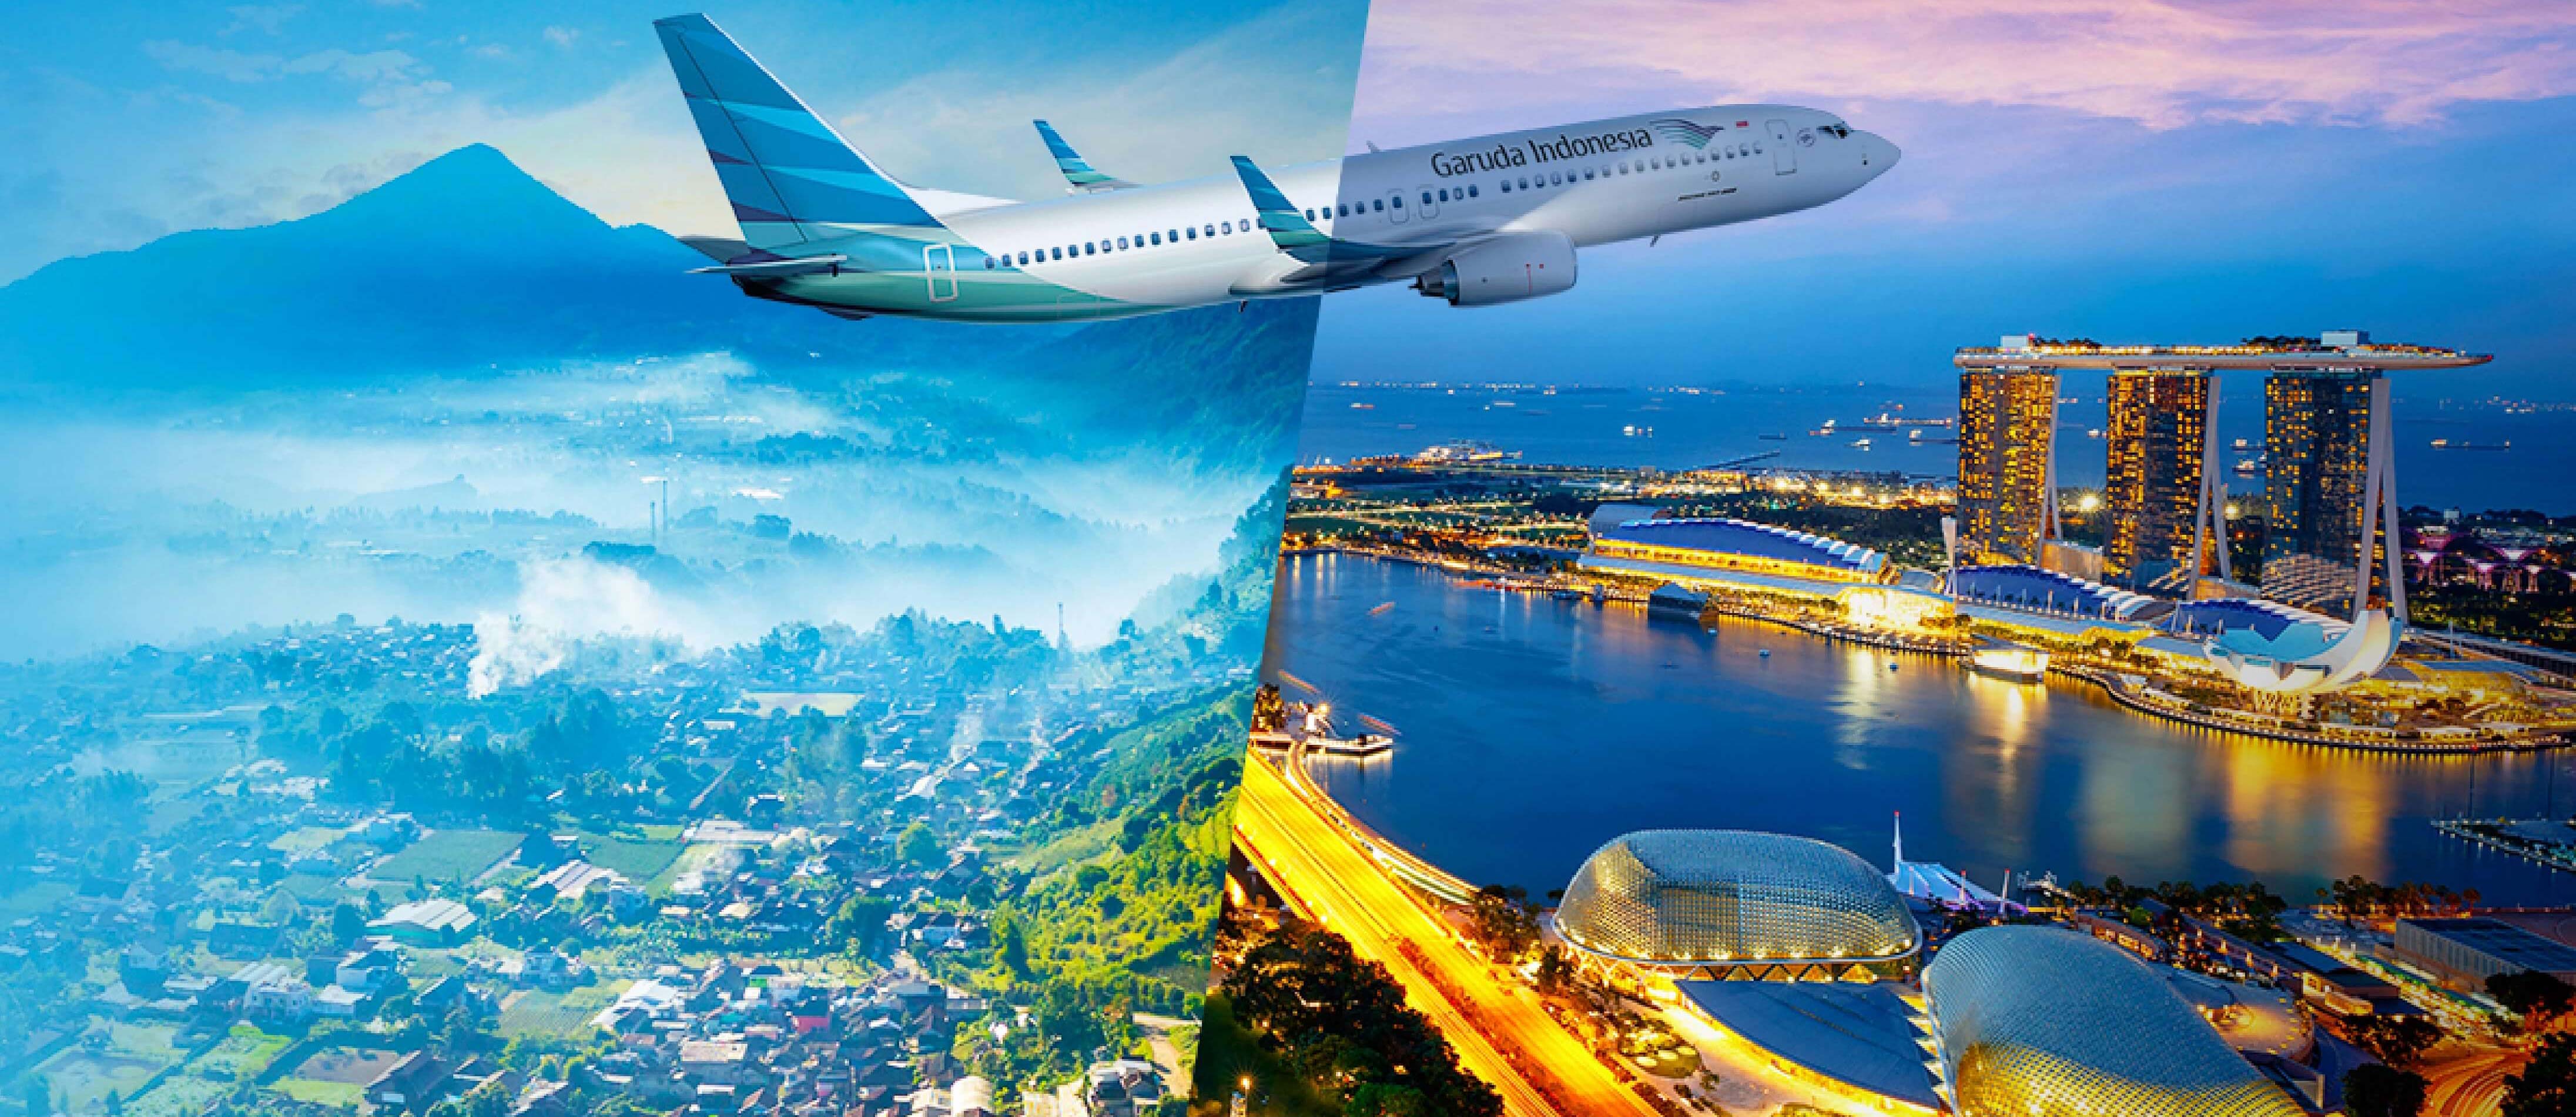 Garuda Indonesia Launch Its Singapore – Bandung Direct Flight